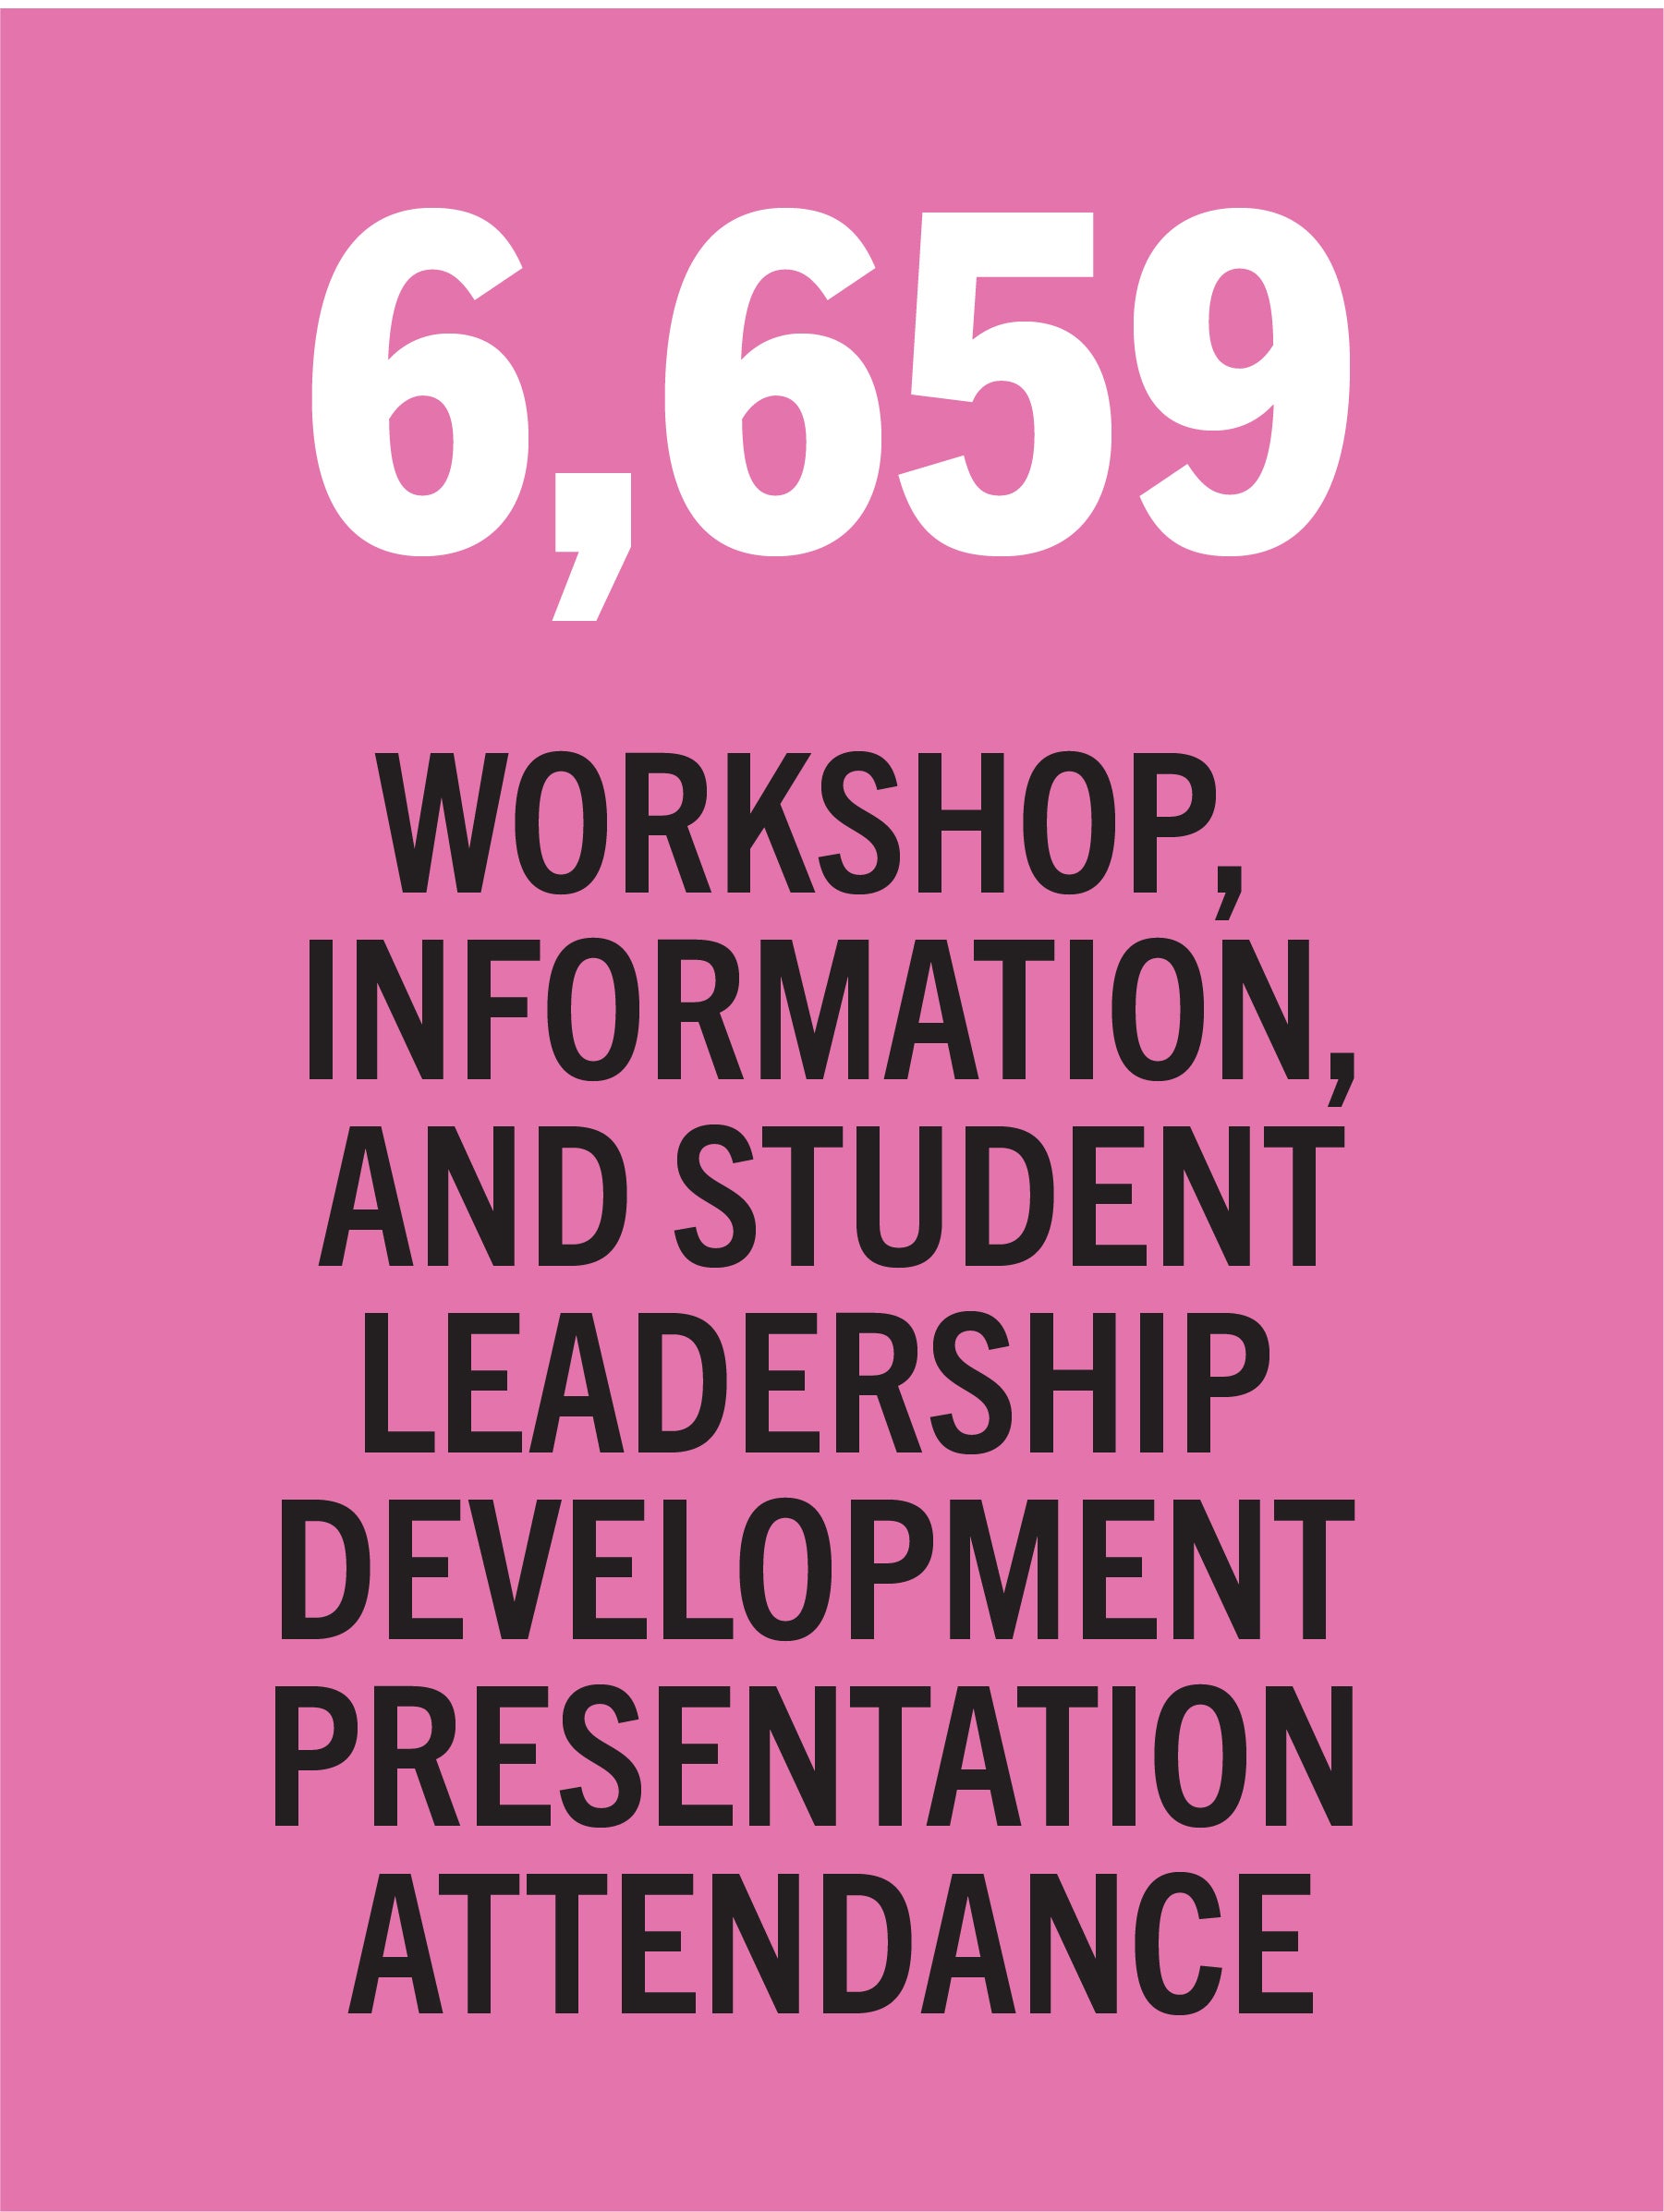 6,659 Workshop, Information, and Student Leadership Development Presentation Attendance